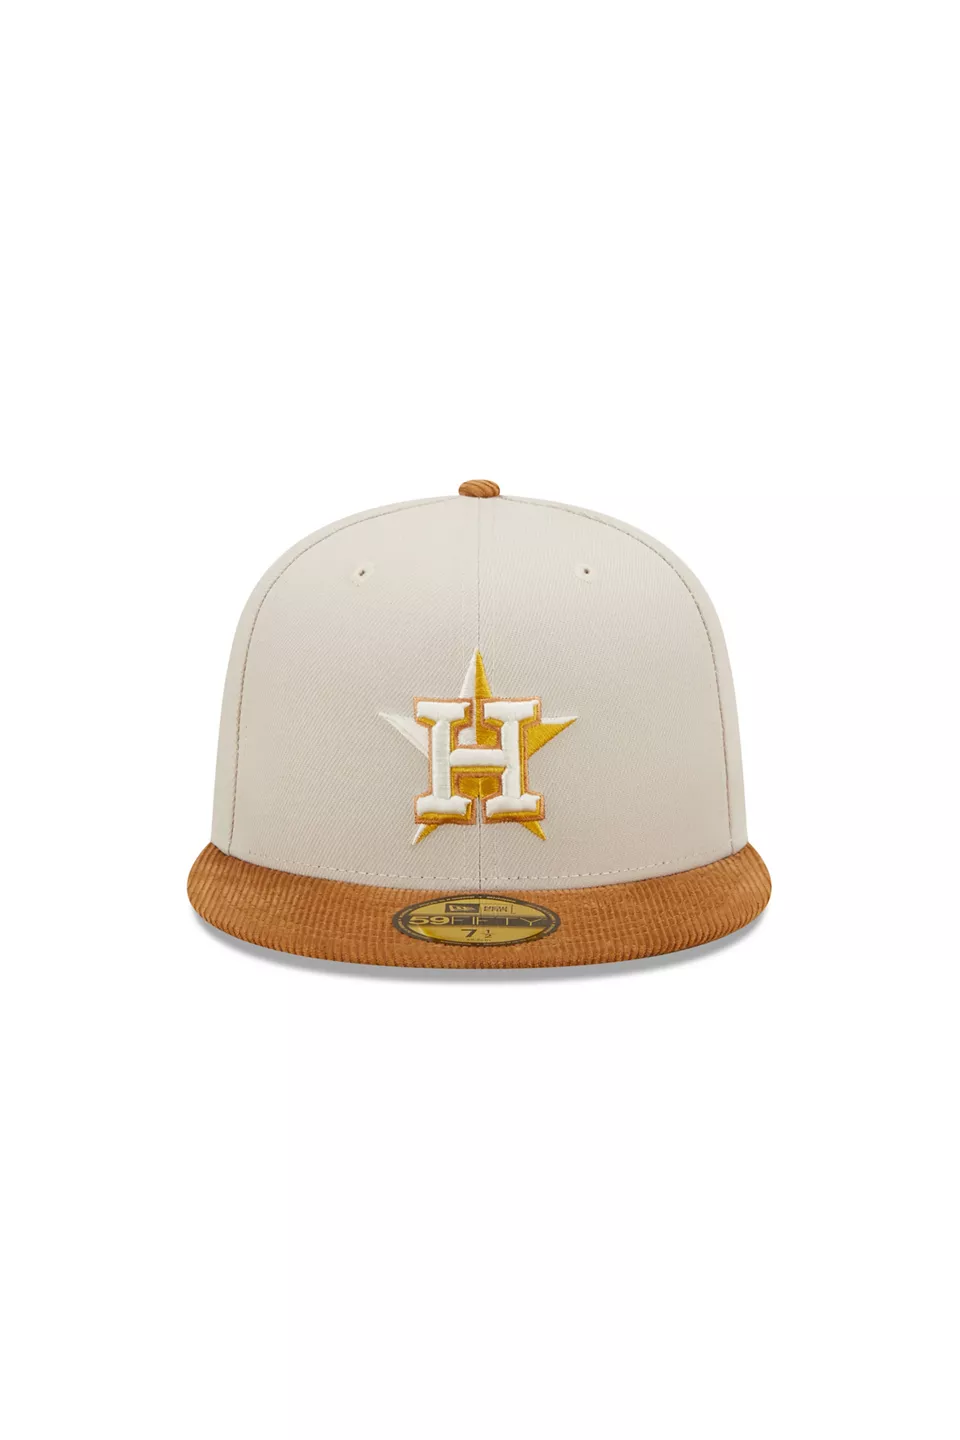 Houston Astros Corduroy Fitted Hat 7 3/4 Black 2000 logo